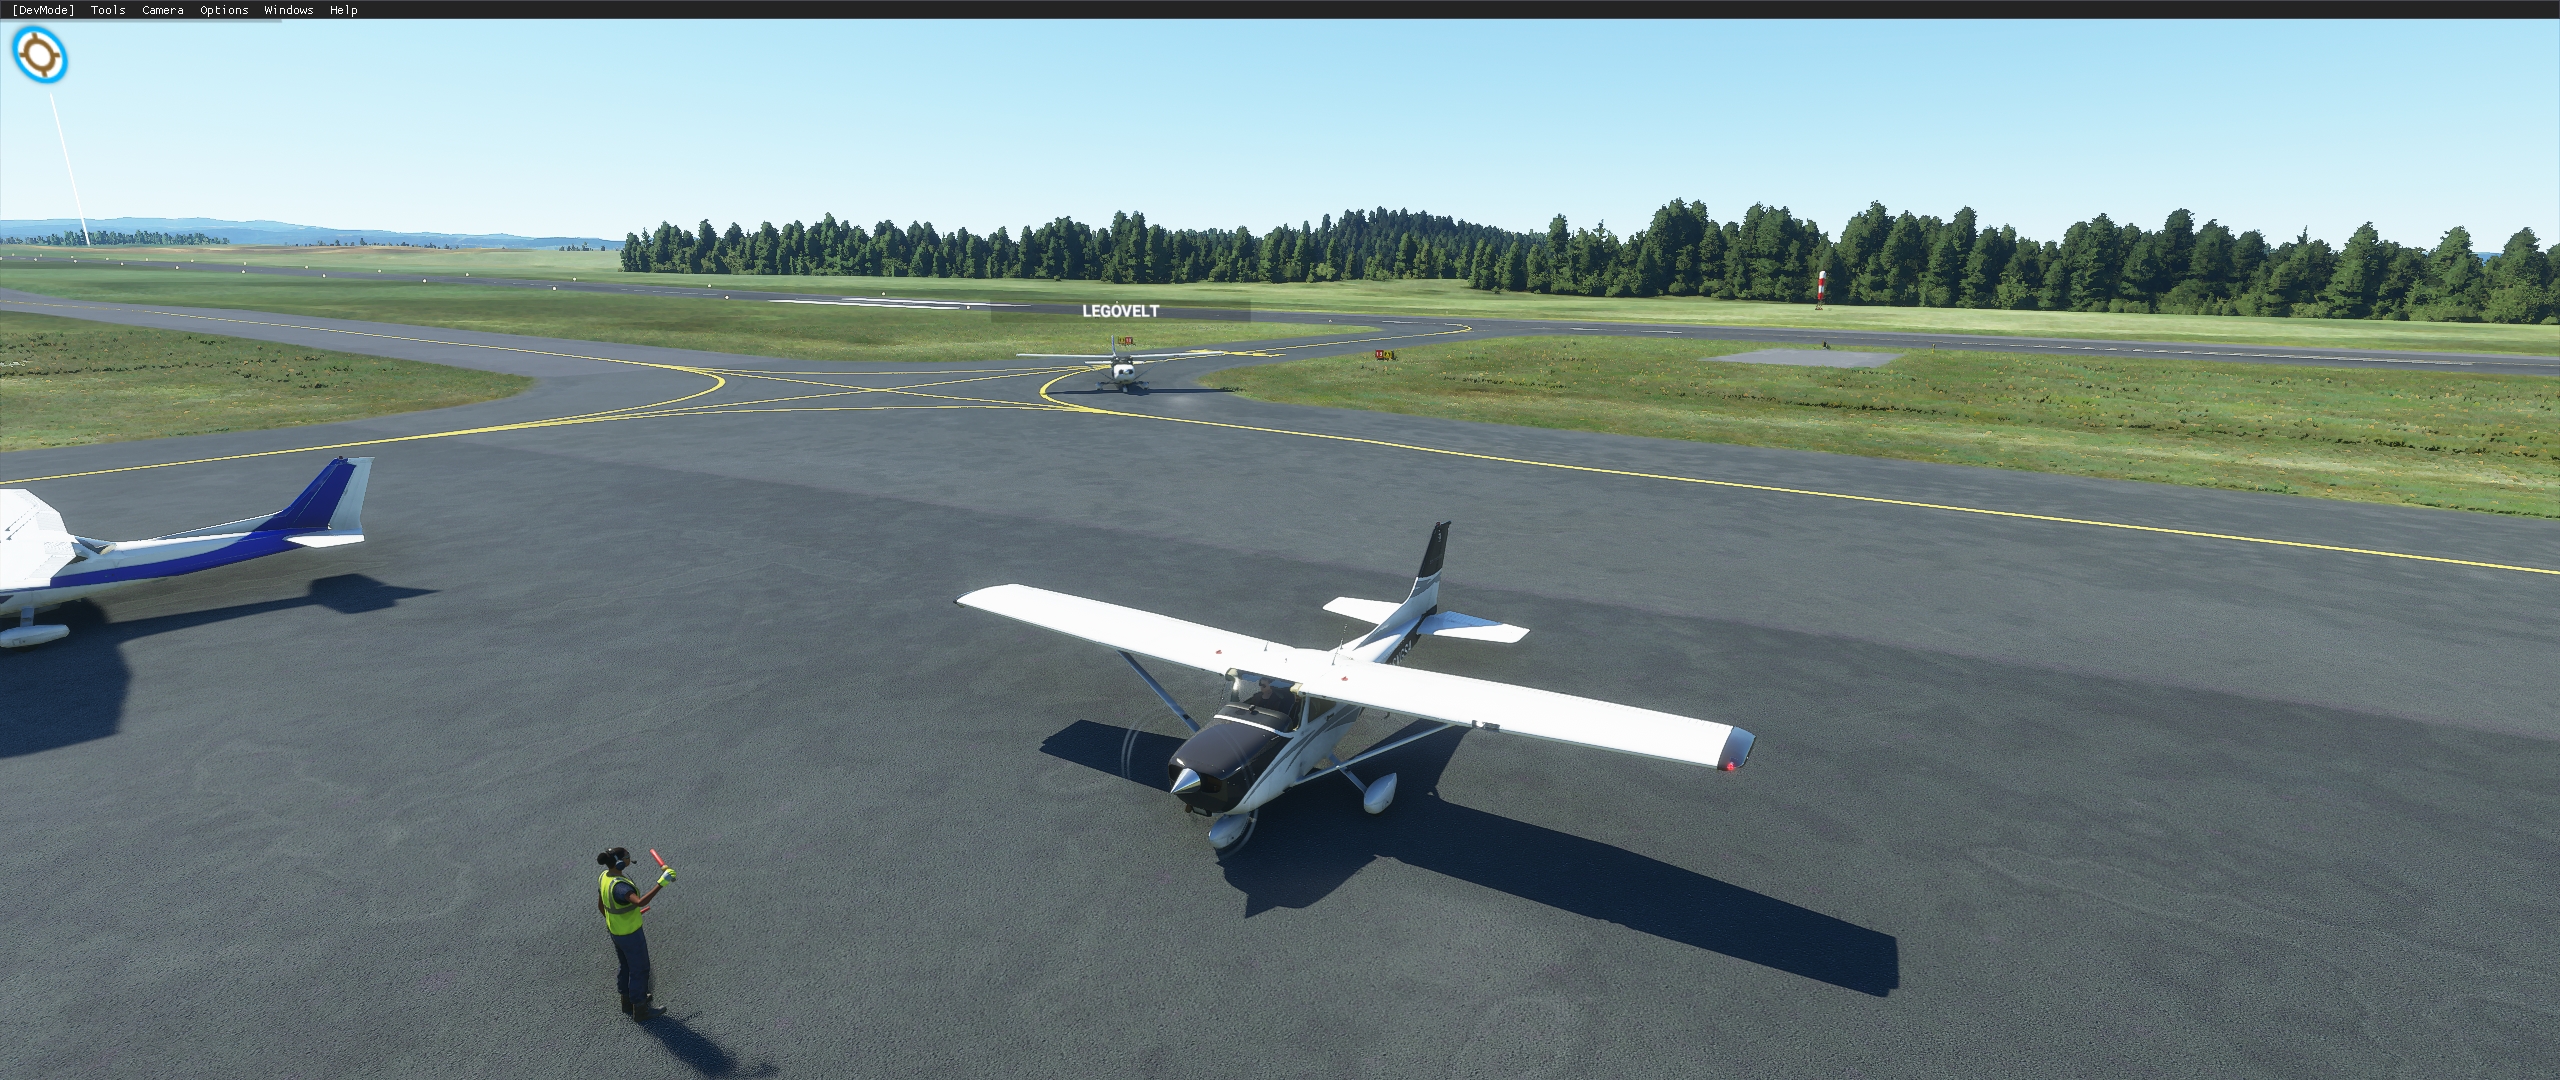 2020-08-25 19_25_04-Microsoft Flight Simulator - 1.7.12.0.jpg